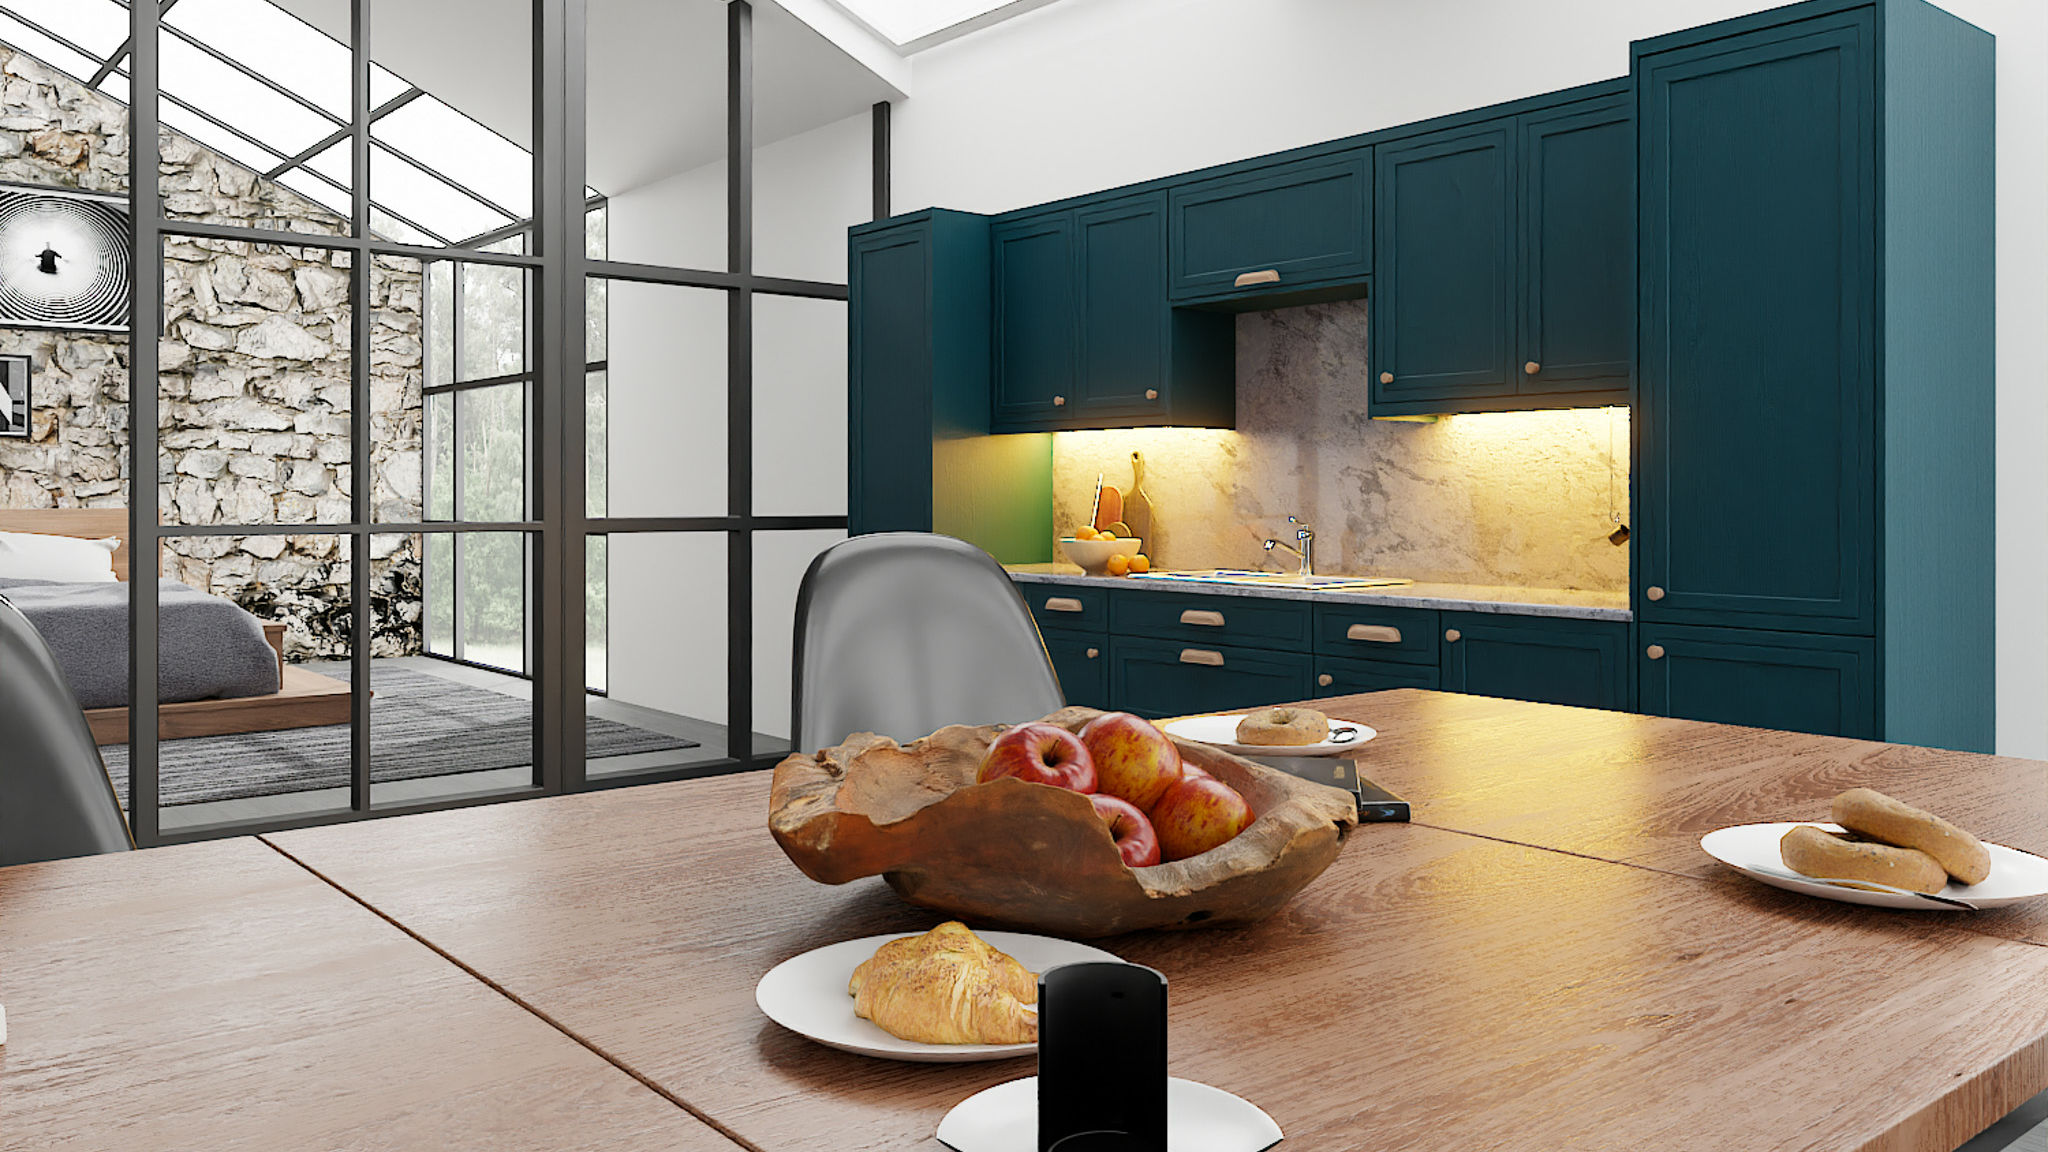 Mock Inframe Arrington Marine kitchens designed to imitate a bespoke inframe look in an elegant marine blue